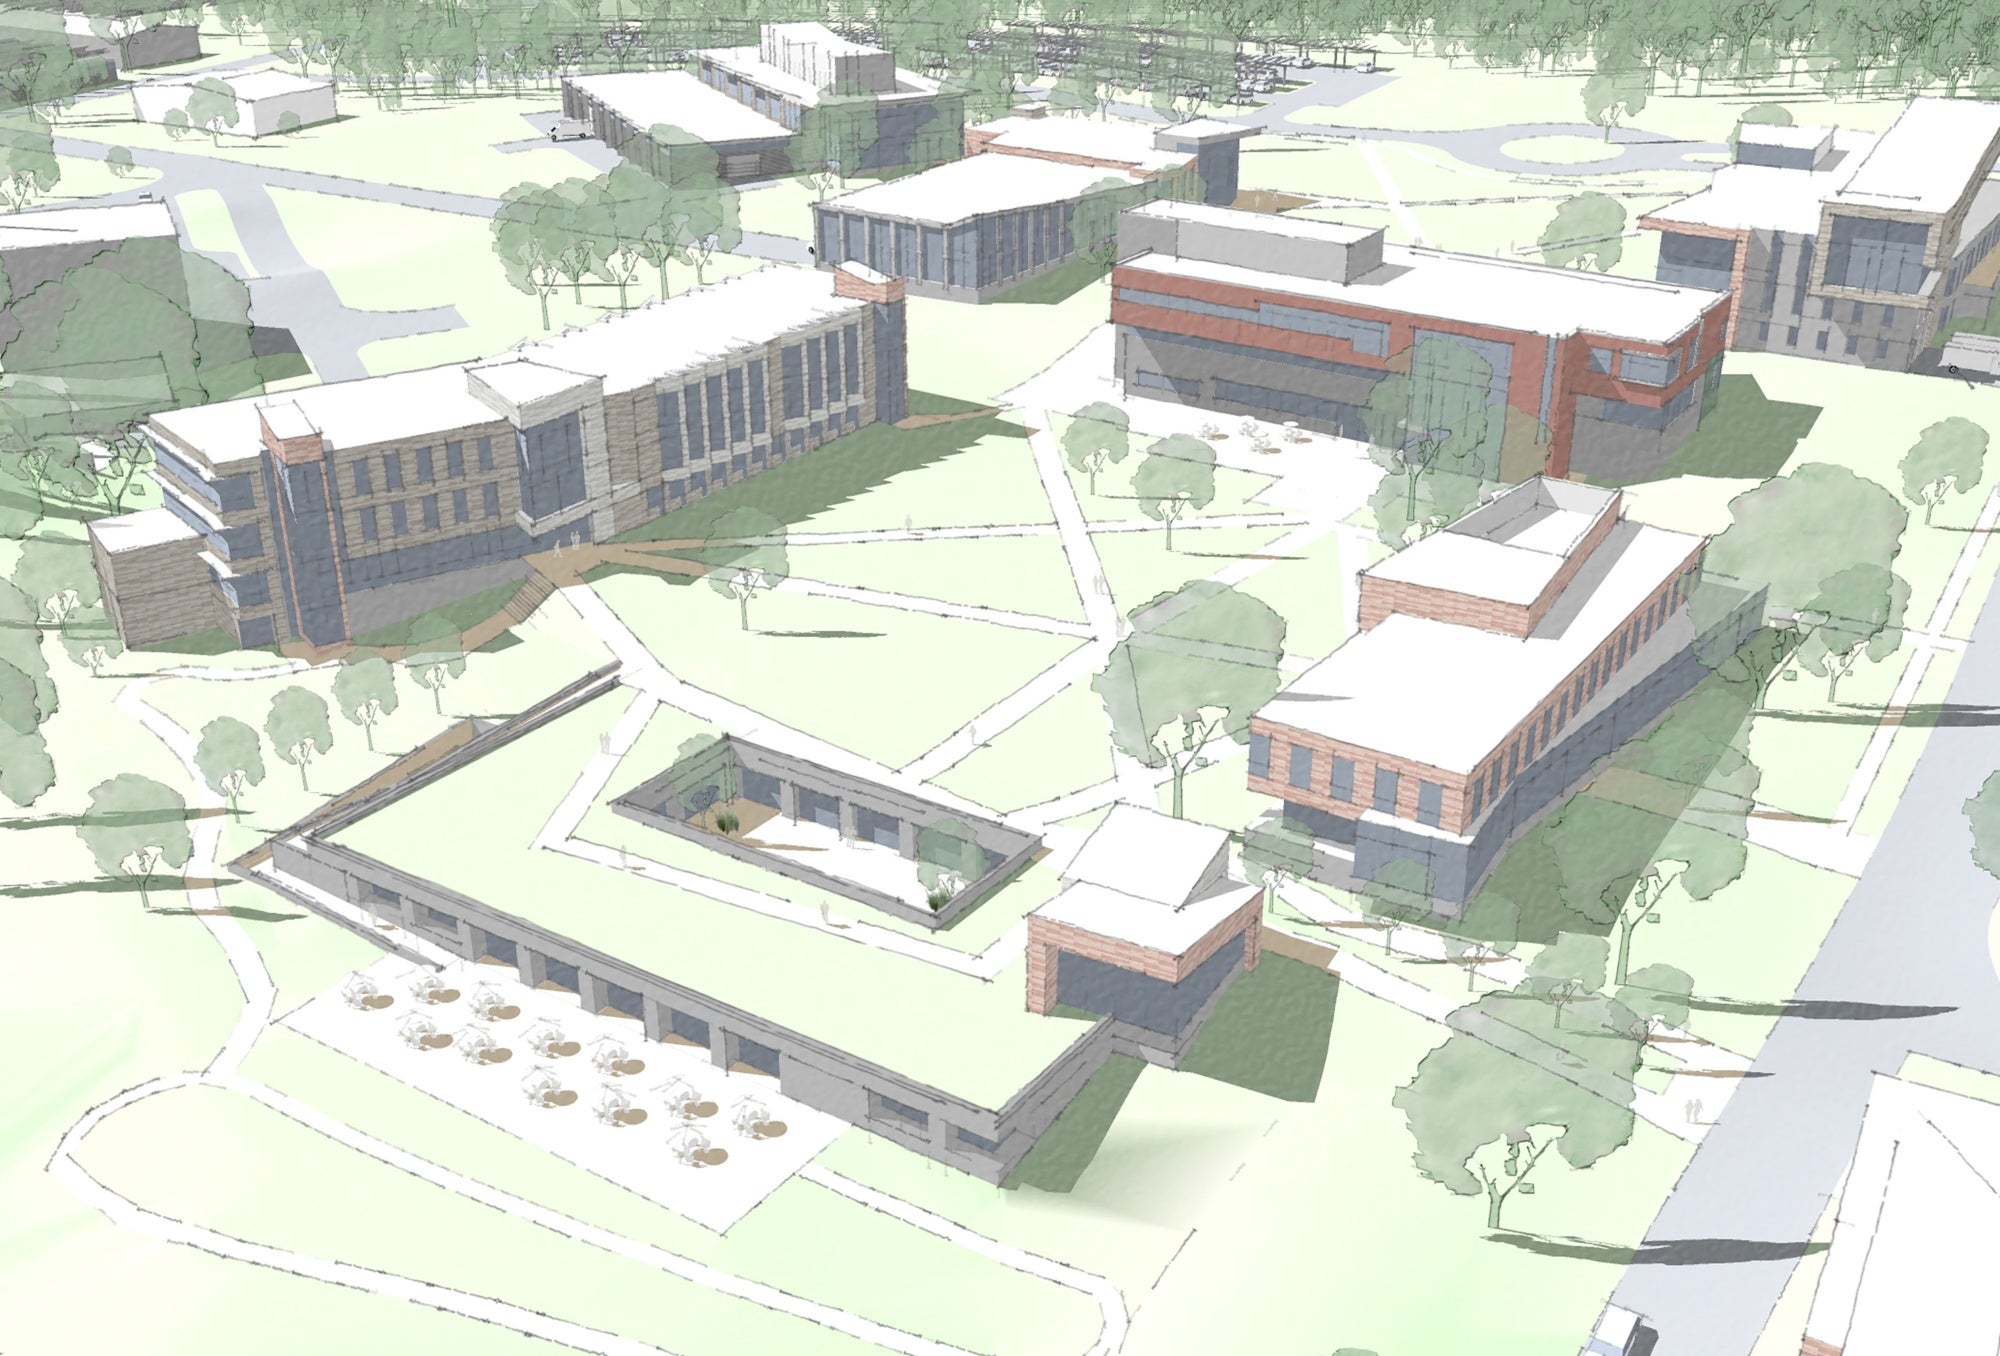 Illustration of a renewed Bay Campus from the Narragansett Bay Campus Master Plan.